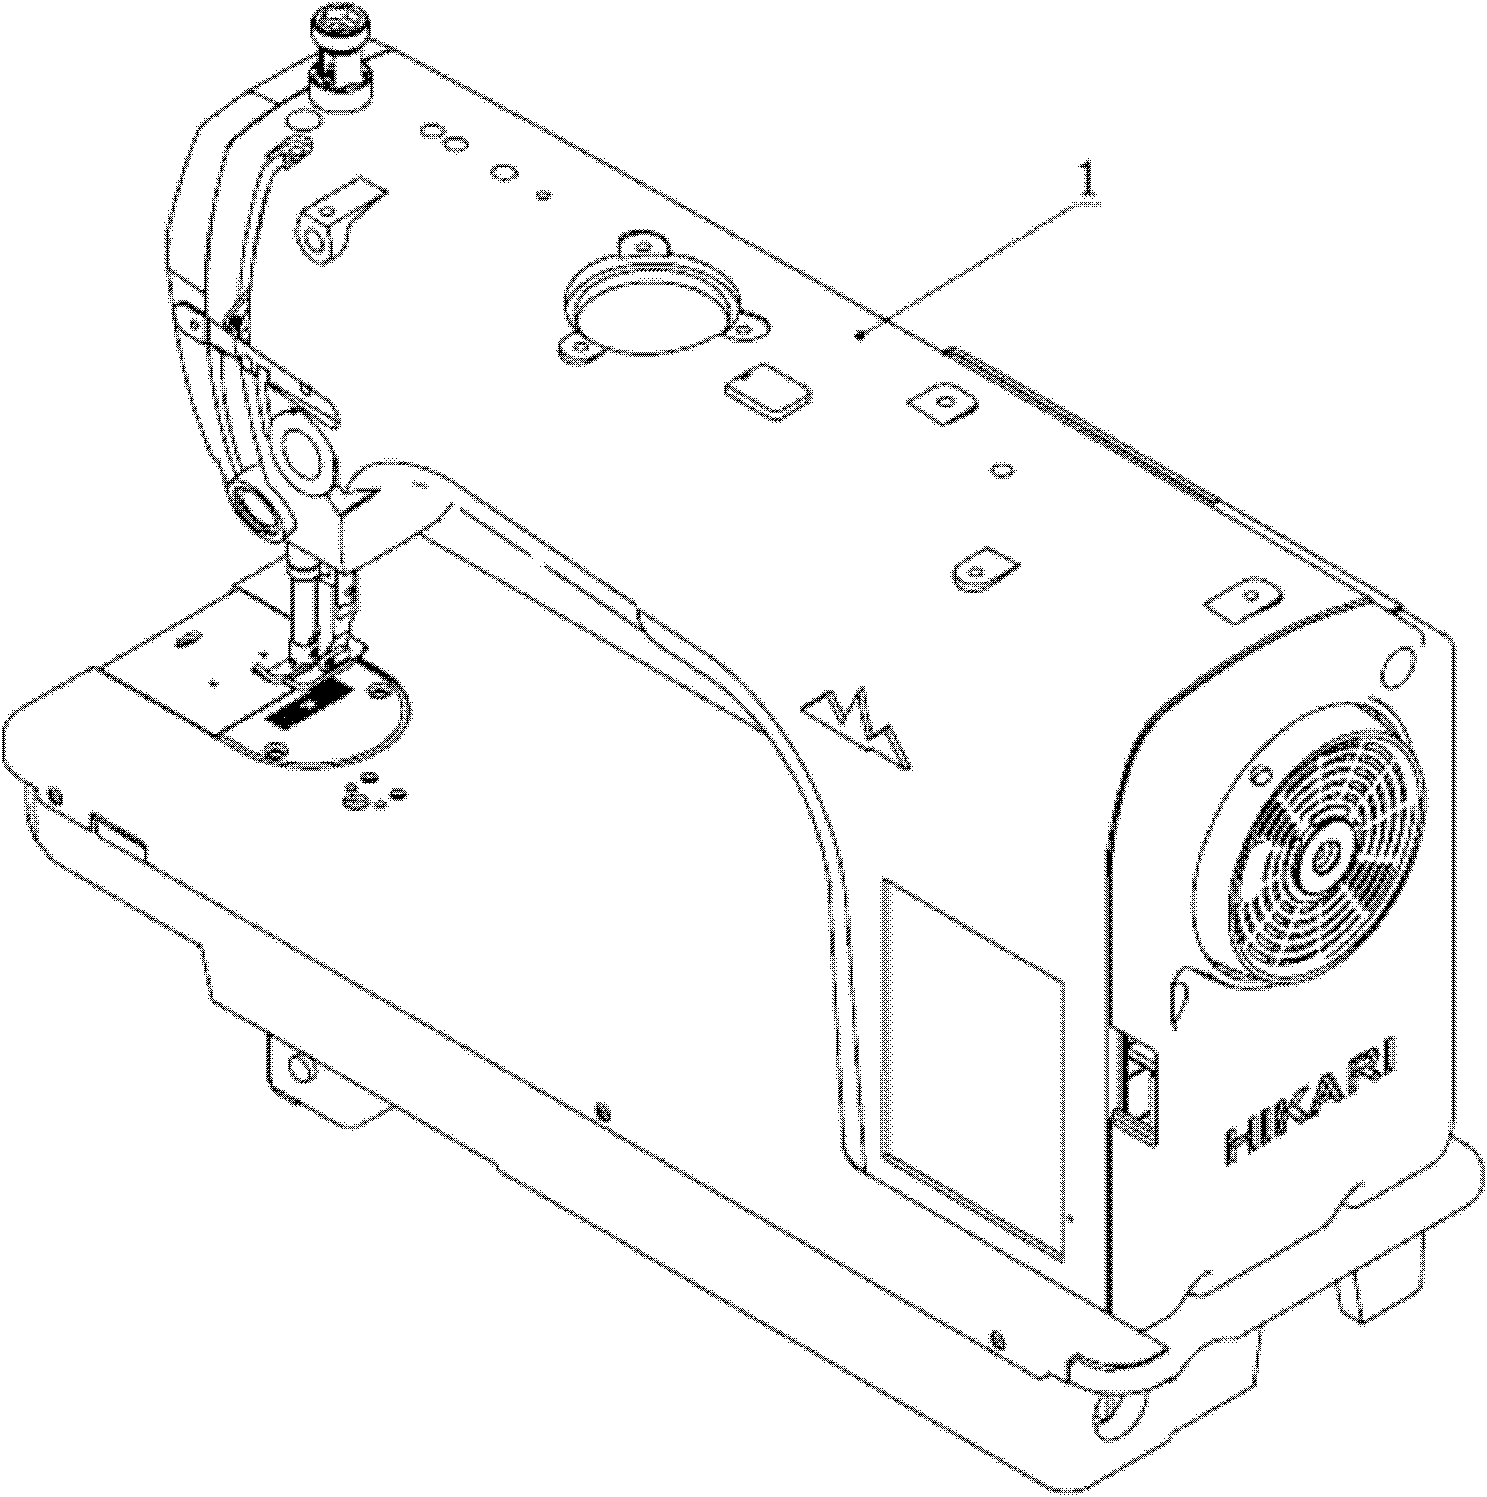 Dual-motor driven computerized sewing machine